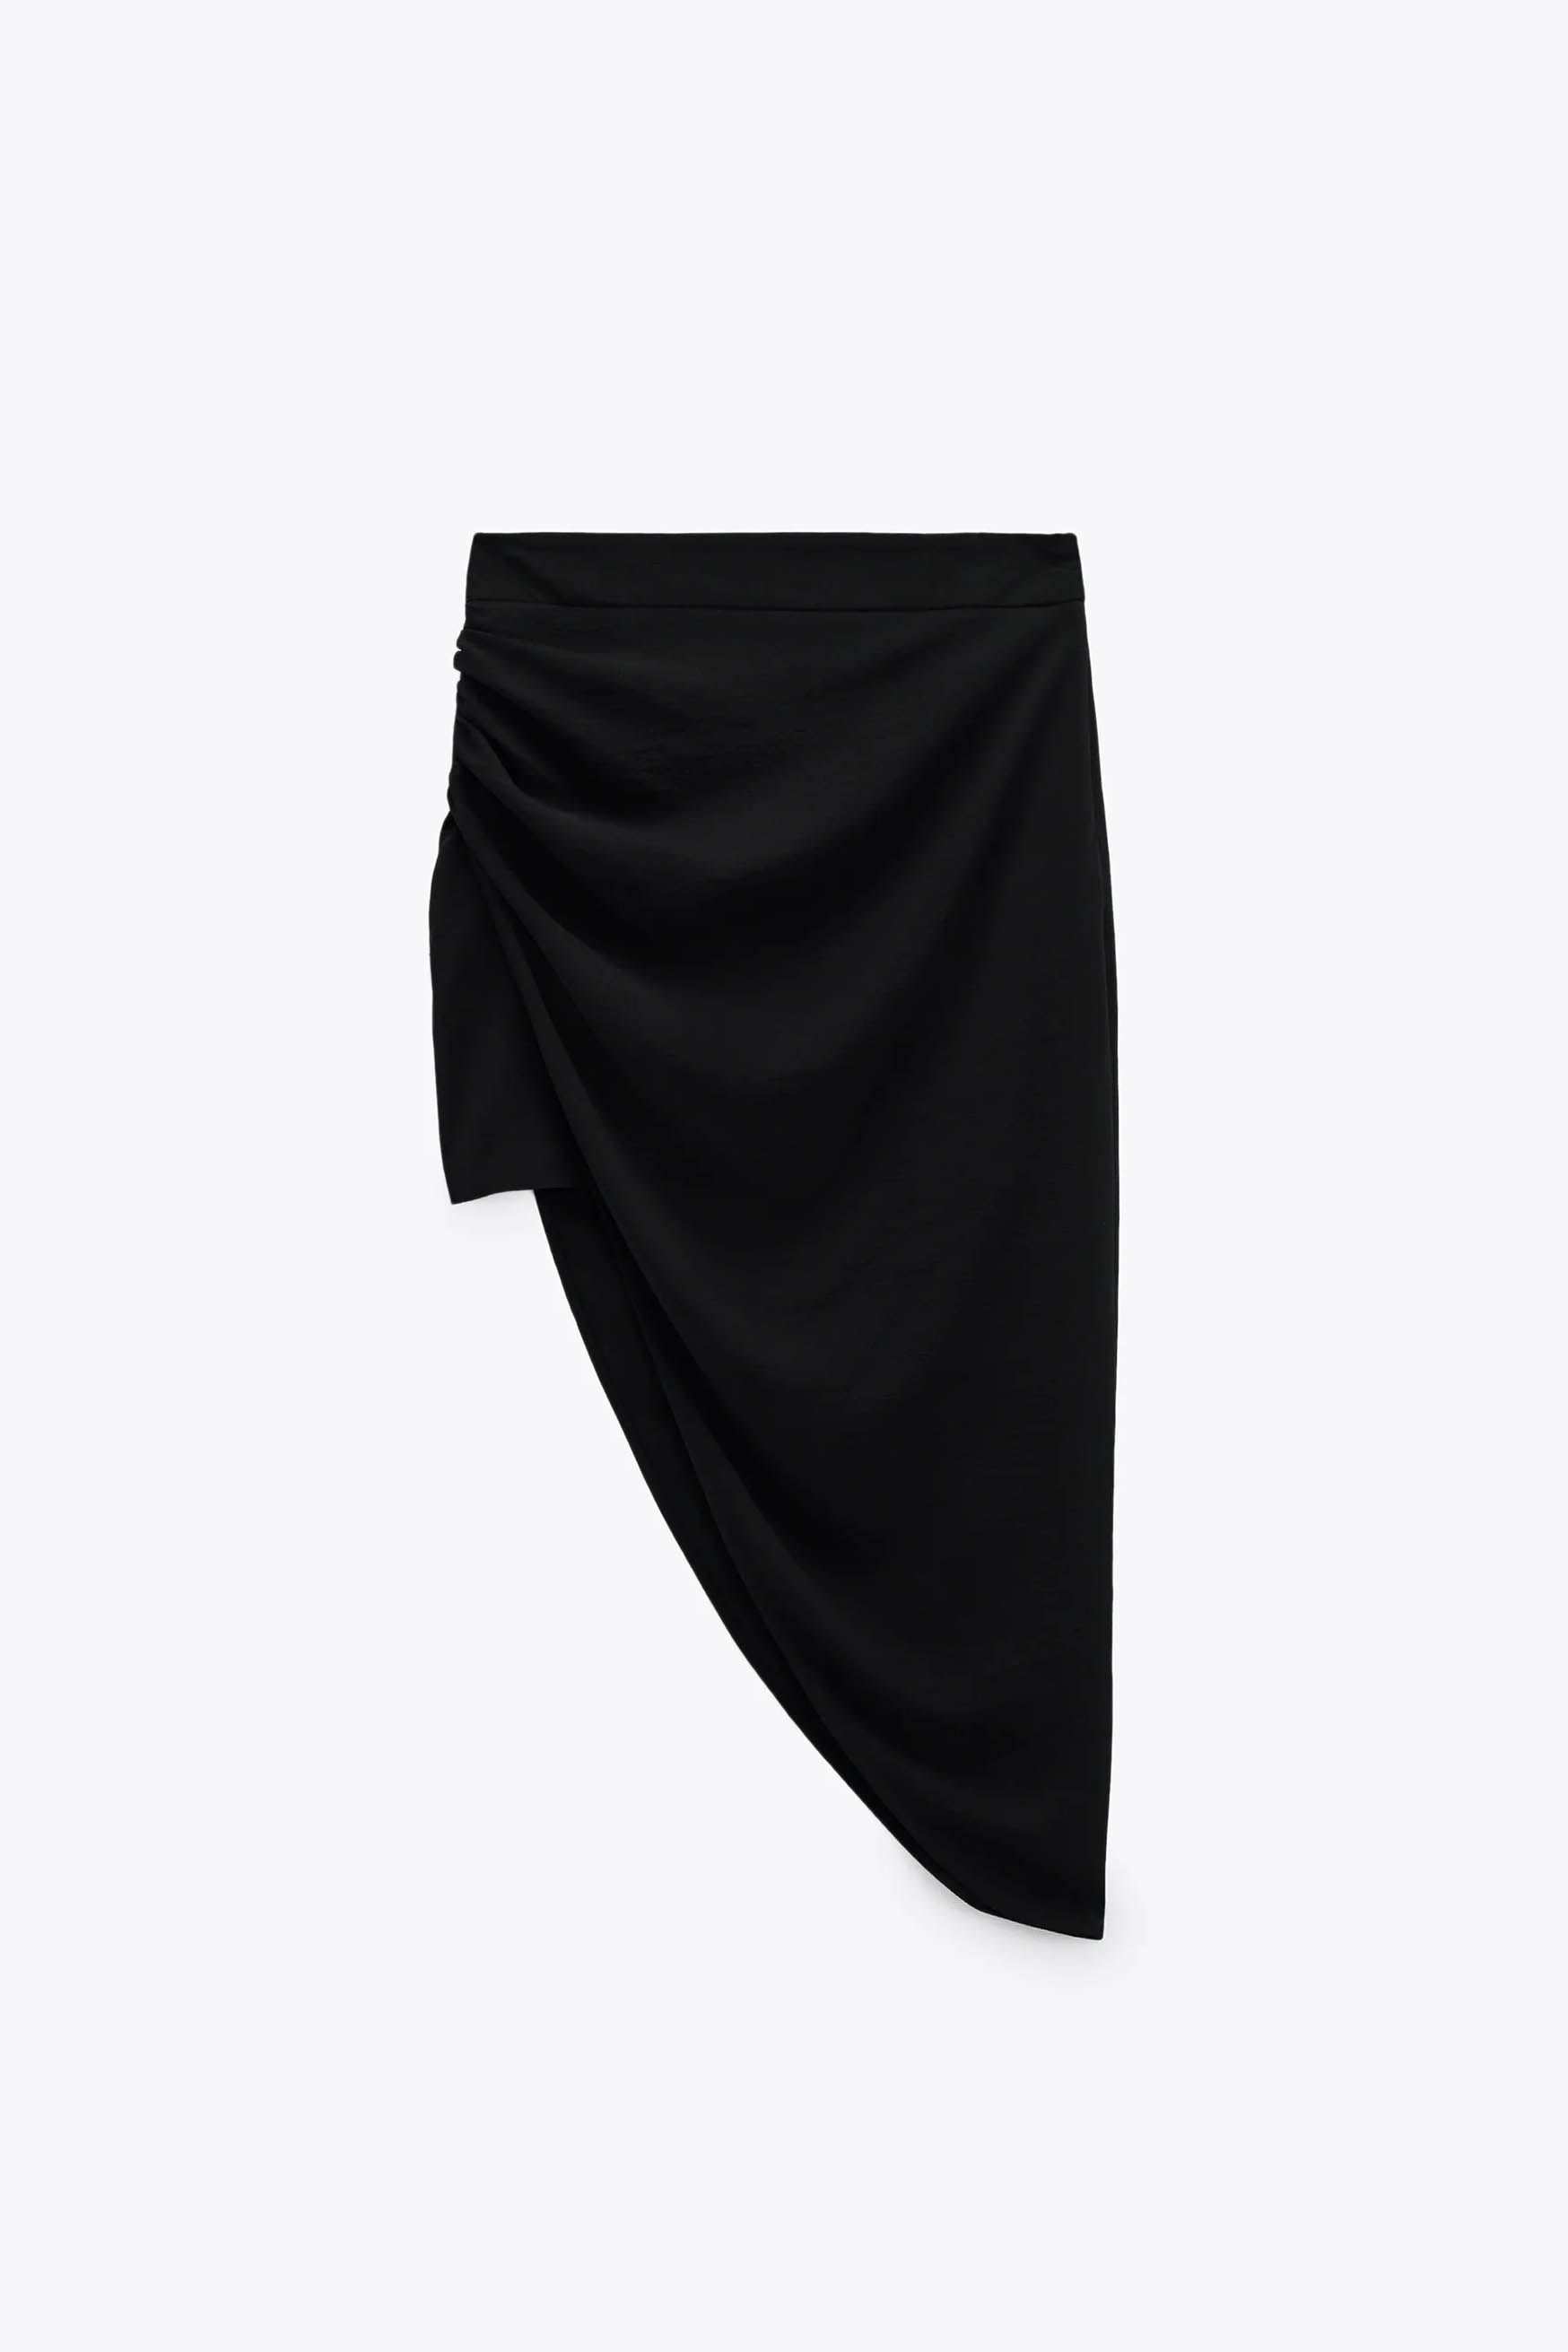 La infalible falda negra  Larga, midi o corta: nadie lleva la